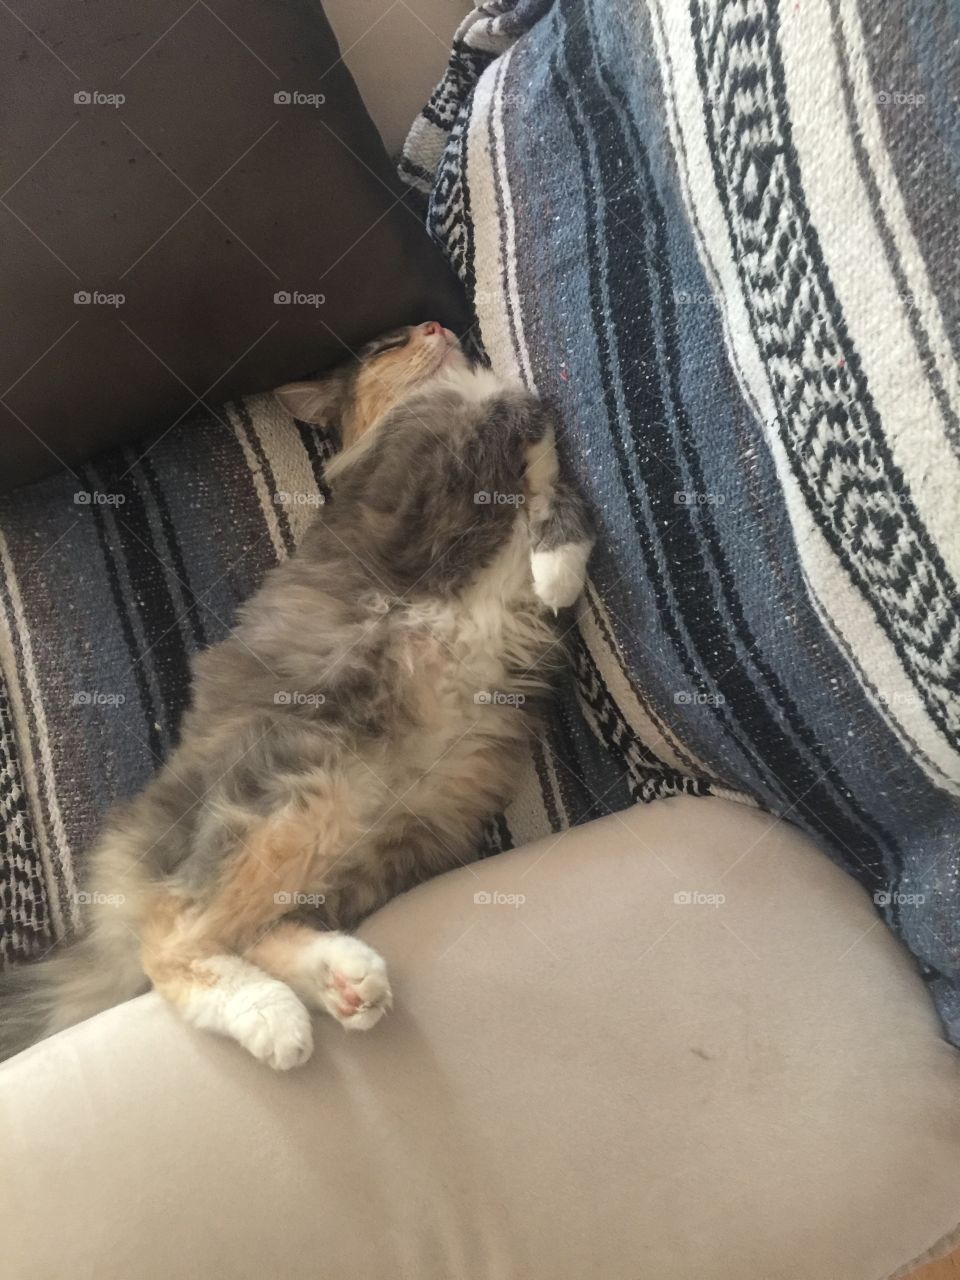 How cats sleep 